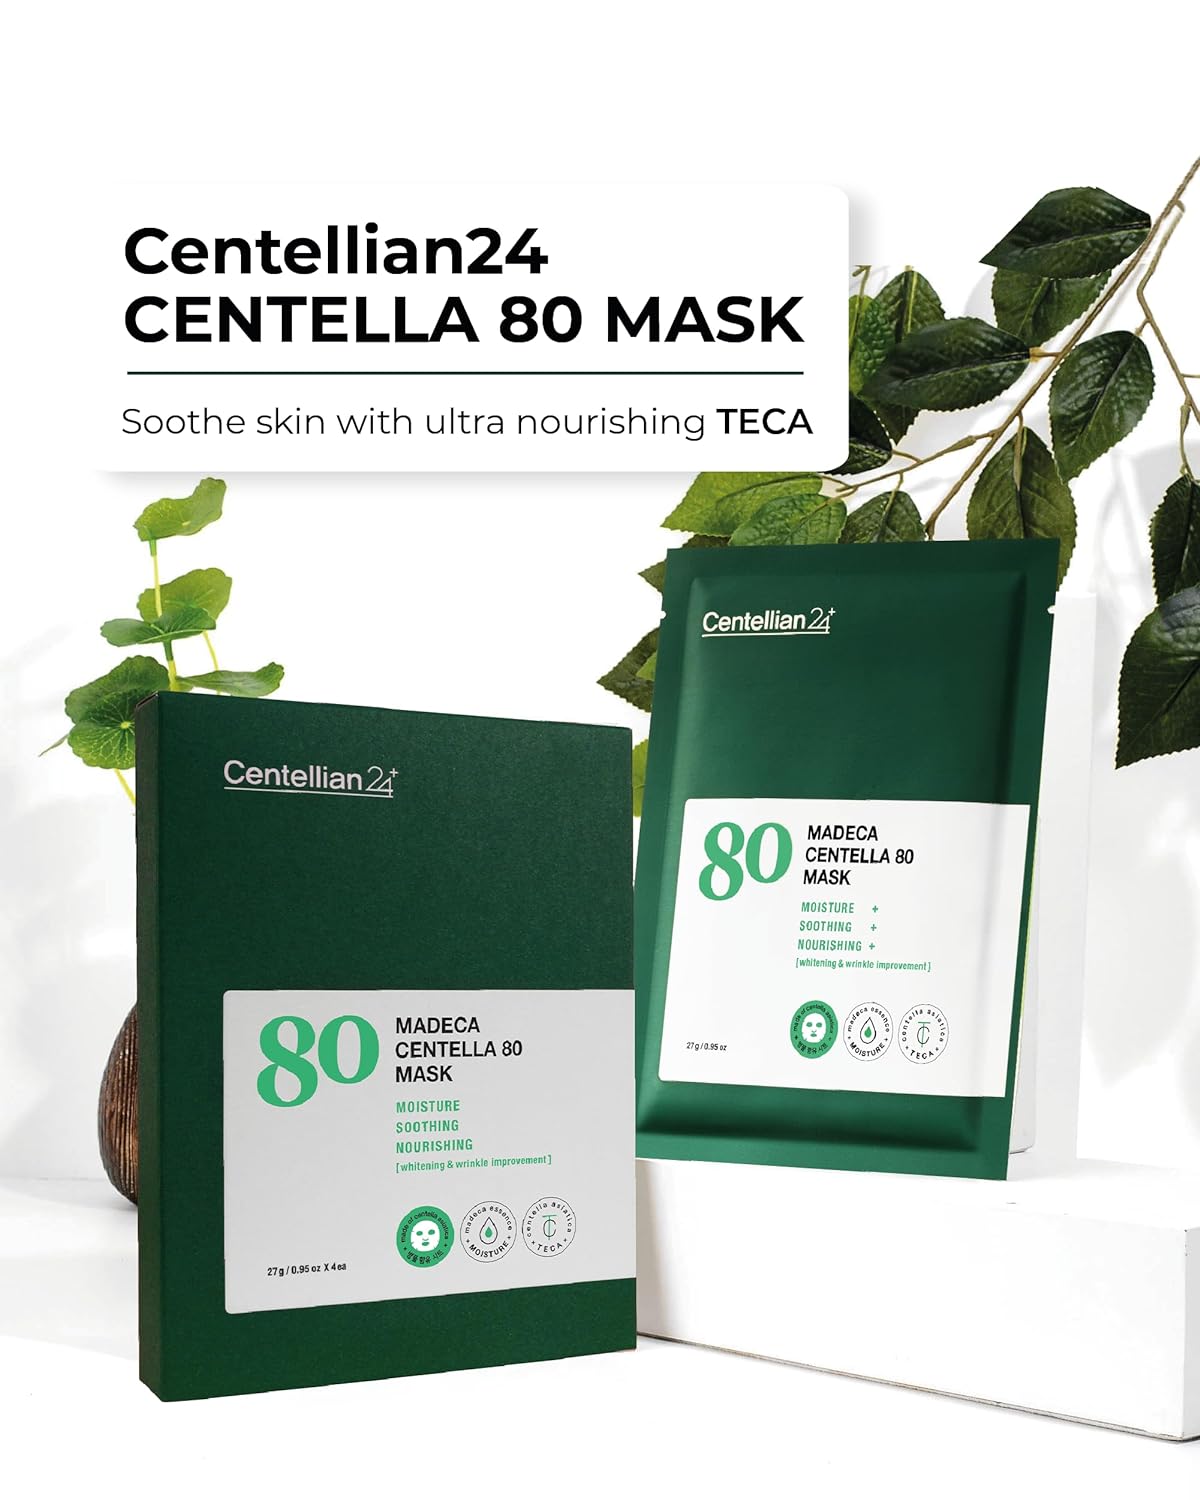 Centellian24 Madeca Centella 80 Mask